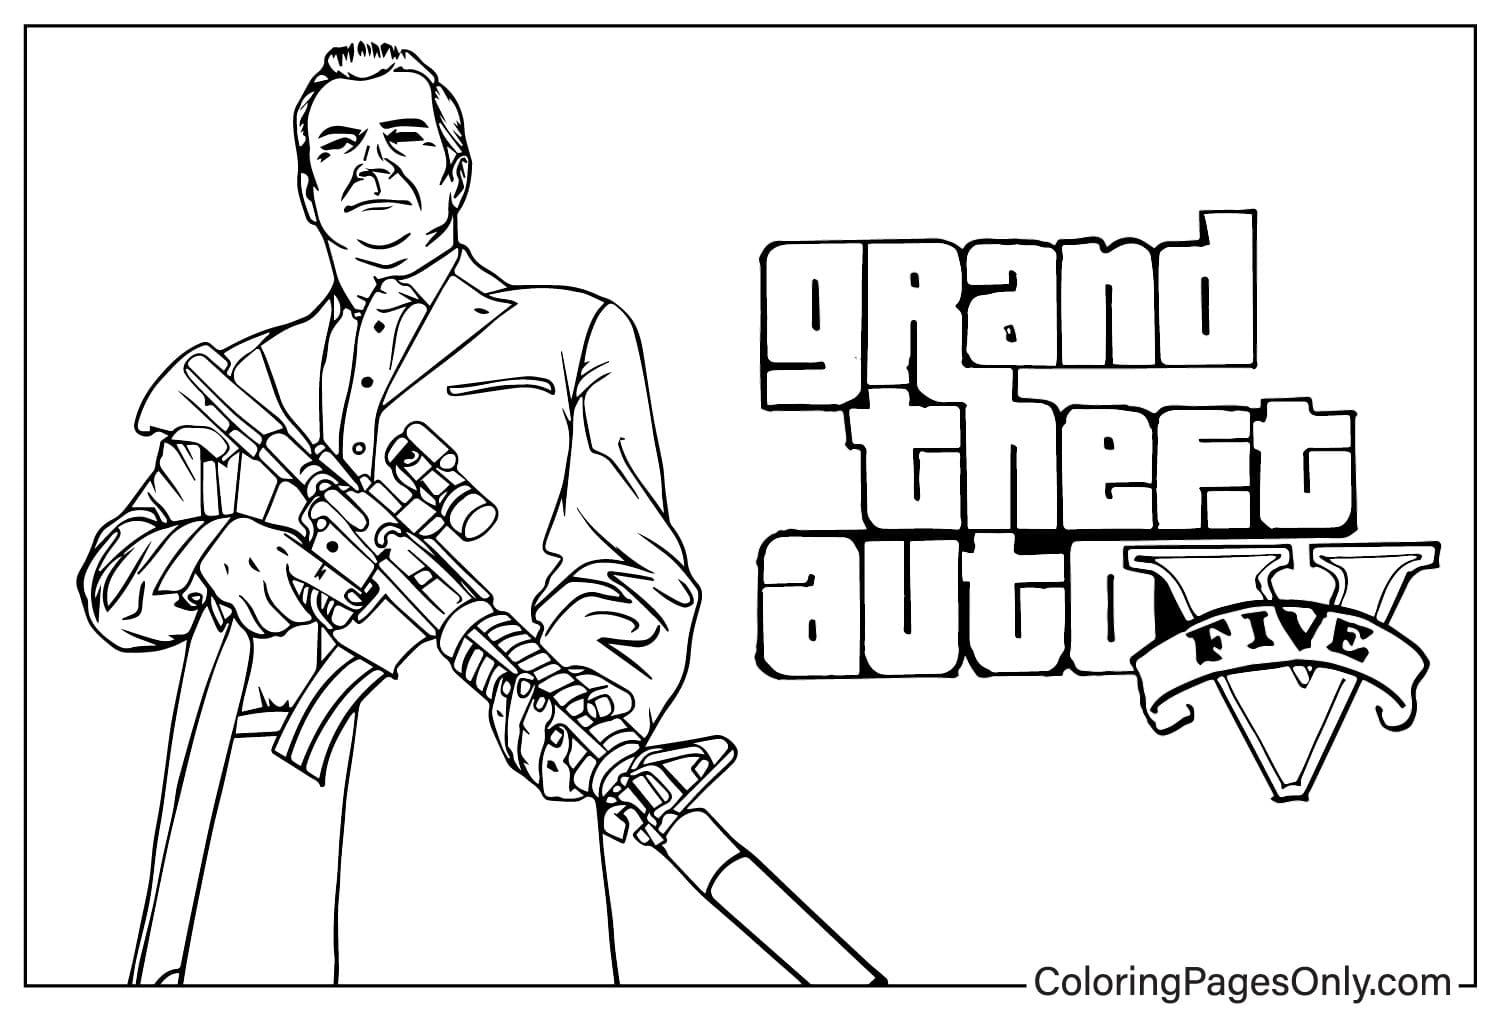 Grand Theft Auto V 侠盗猎车手 V (GTA 5) 中的角色